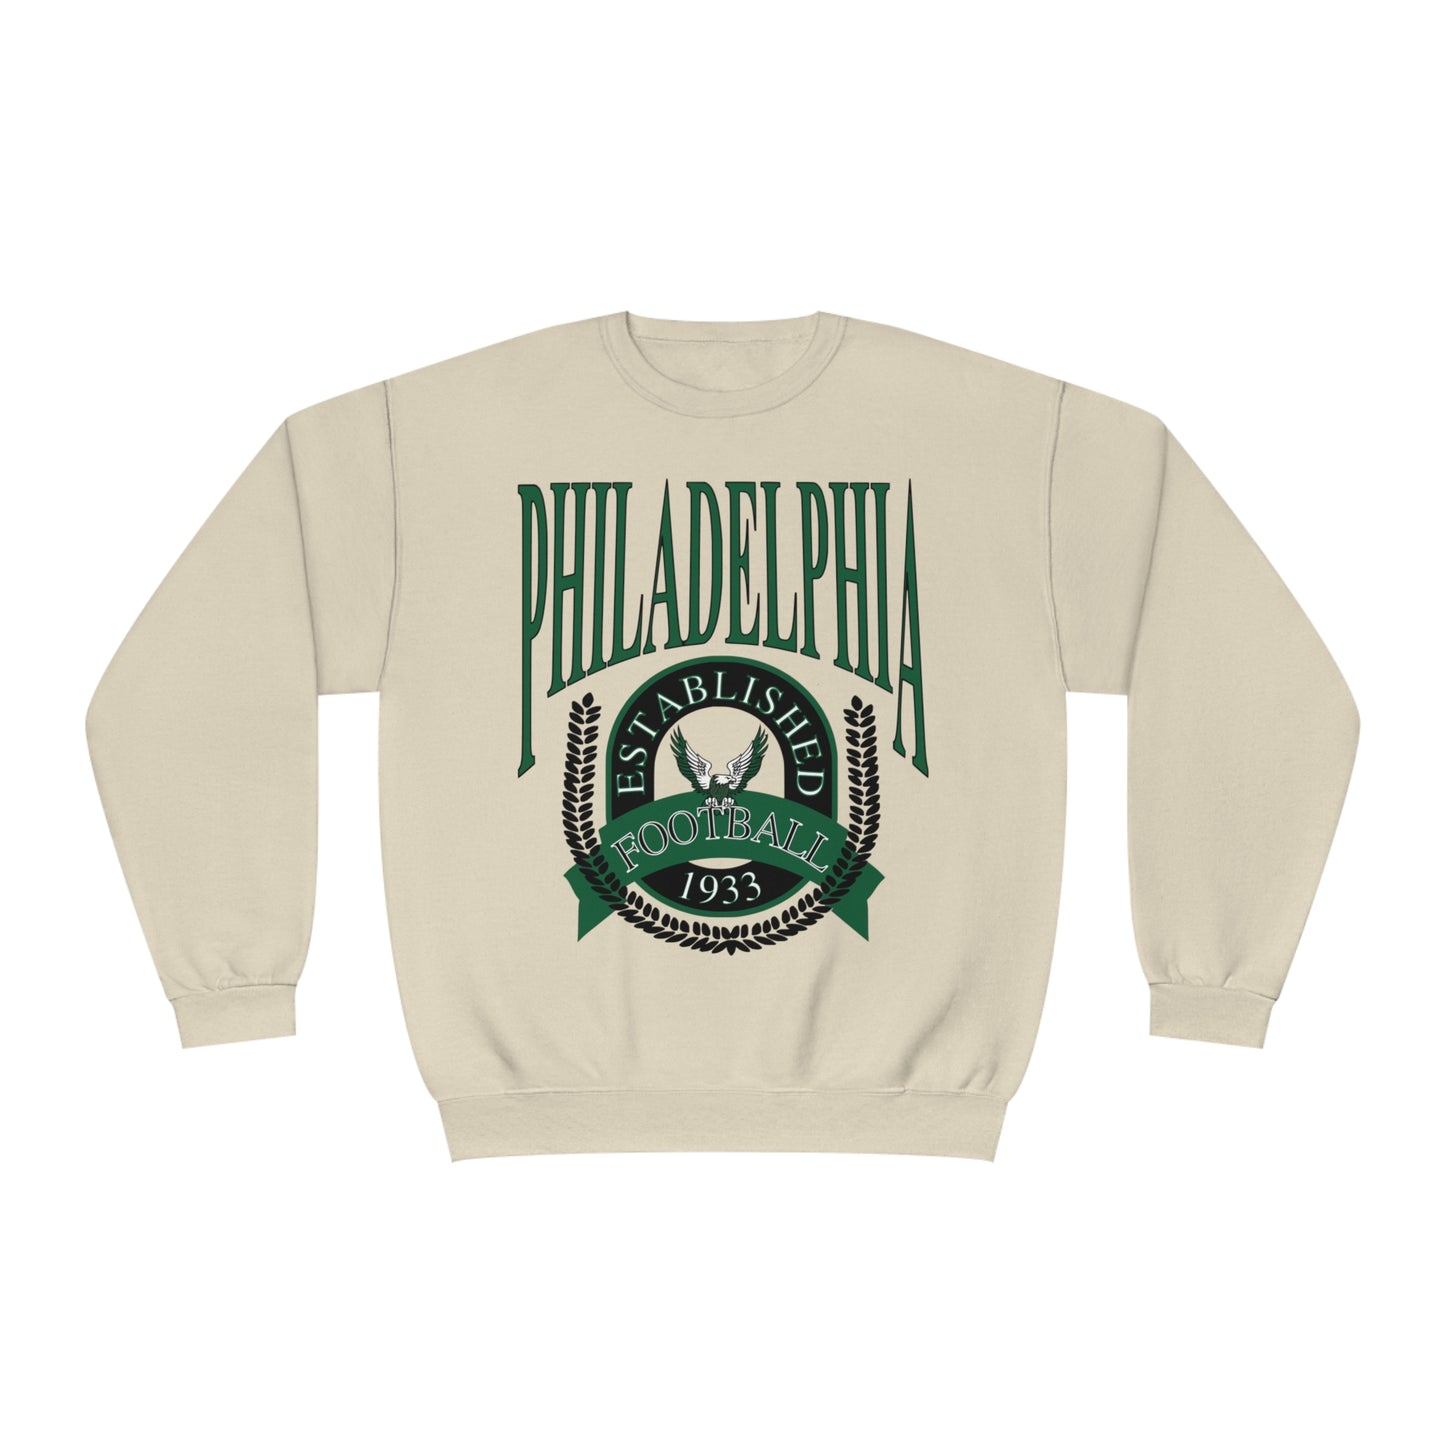 Green Throwback Philadelphia Eagles Crewneck - Vintage Unisex Football Sweatshirt - Men's & Women's 90's Oversized Hoodie - Design 1